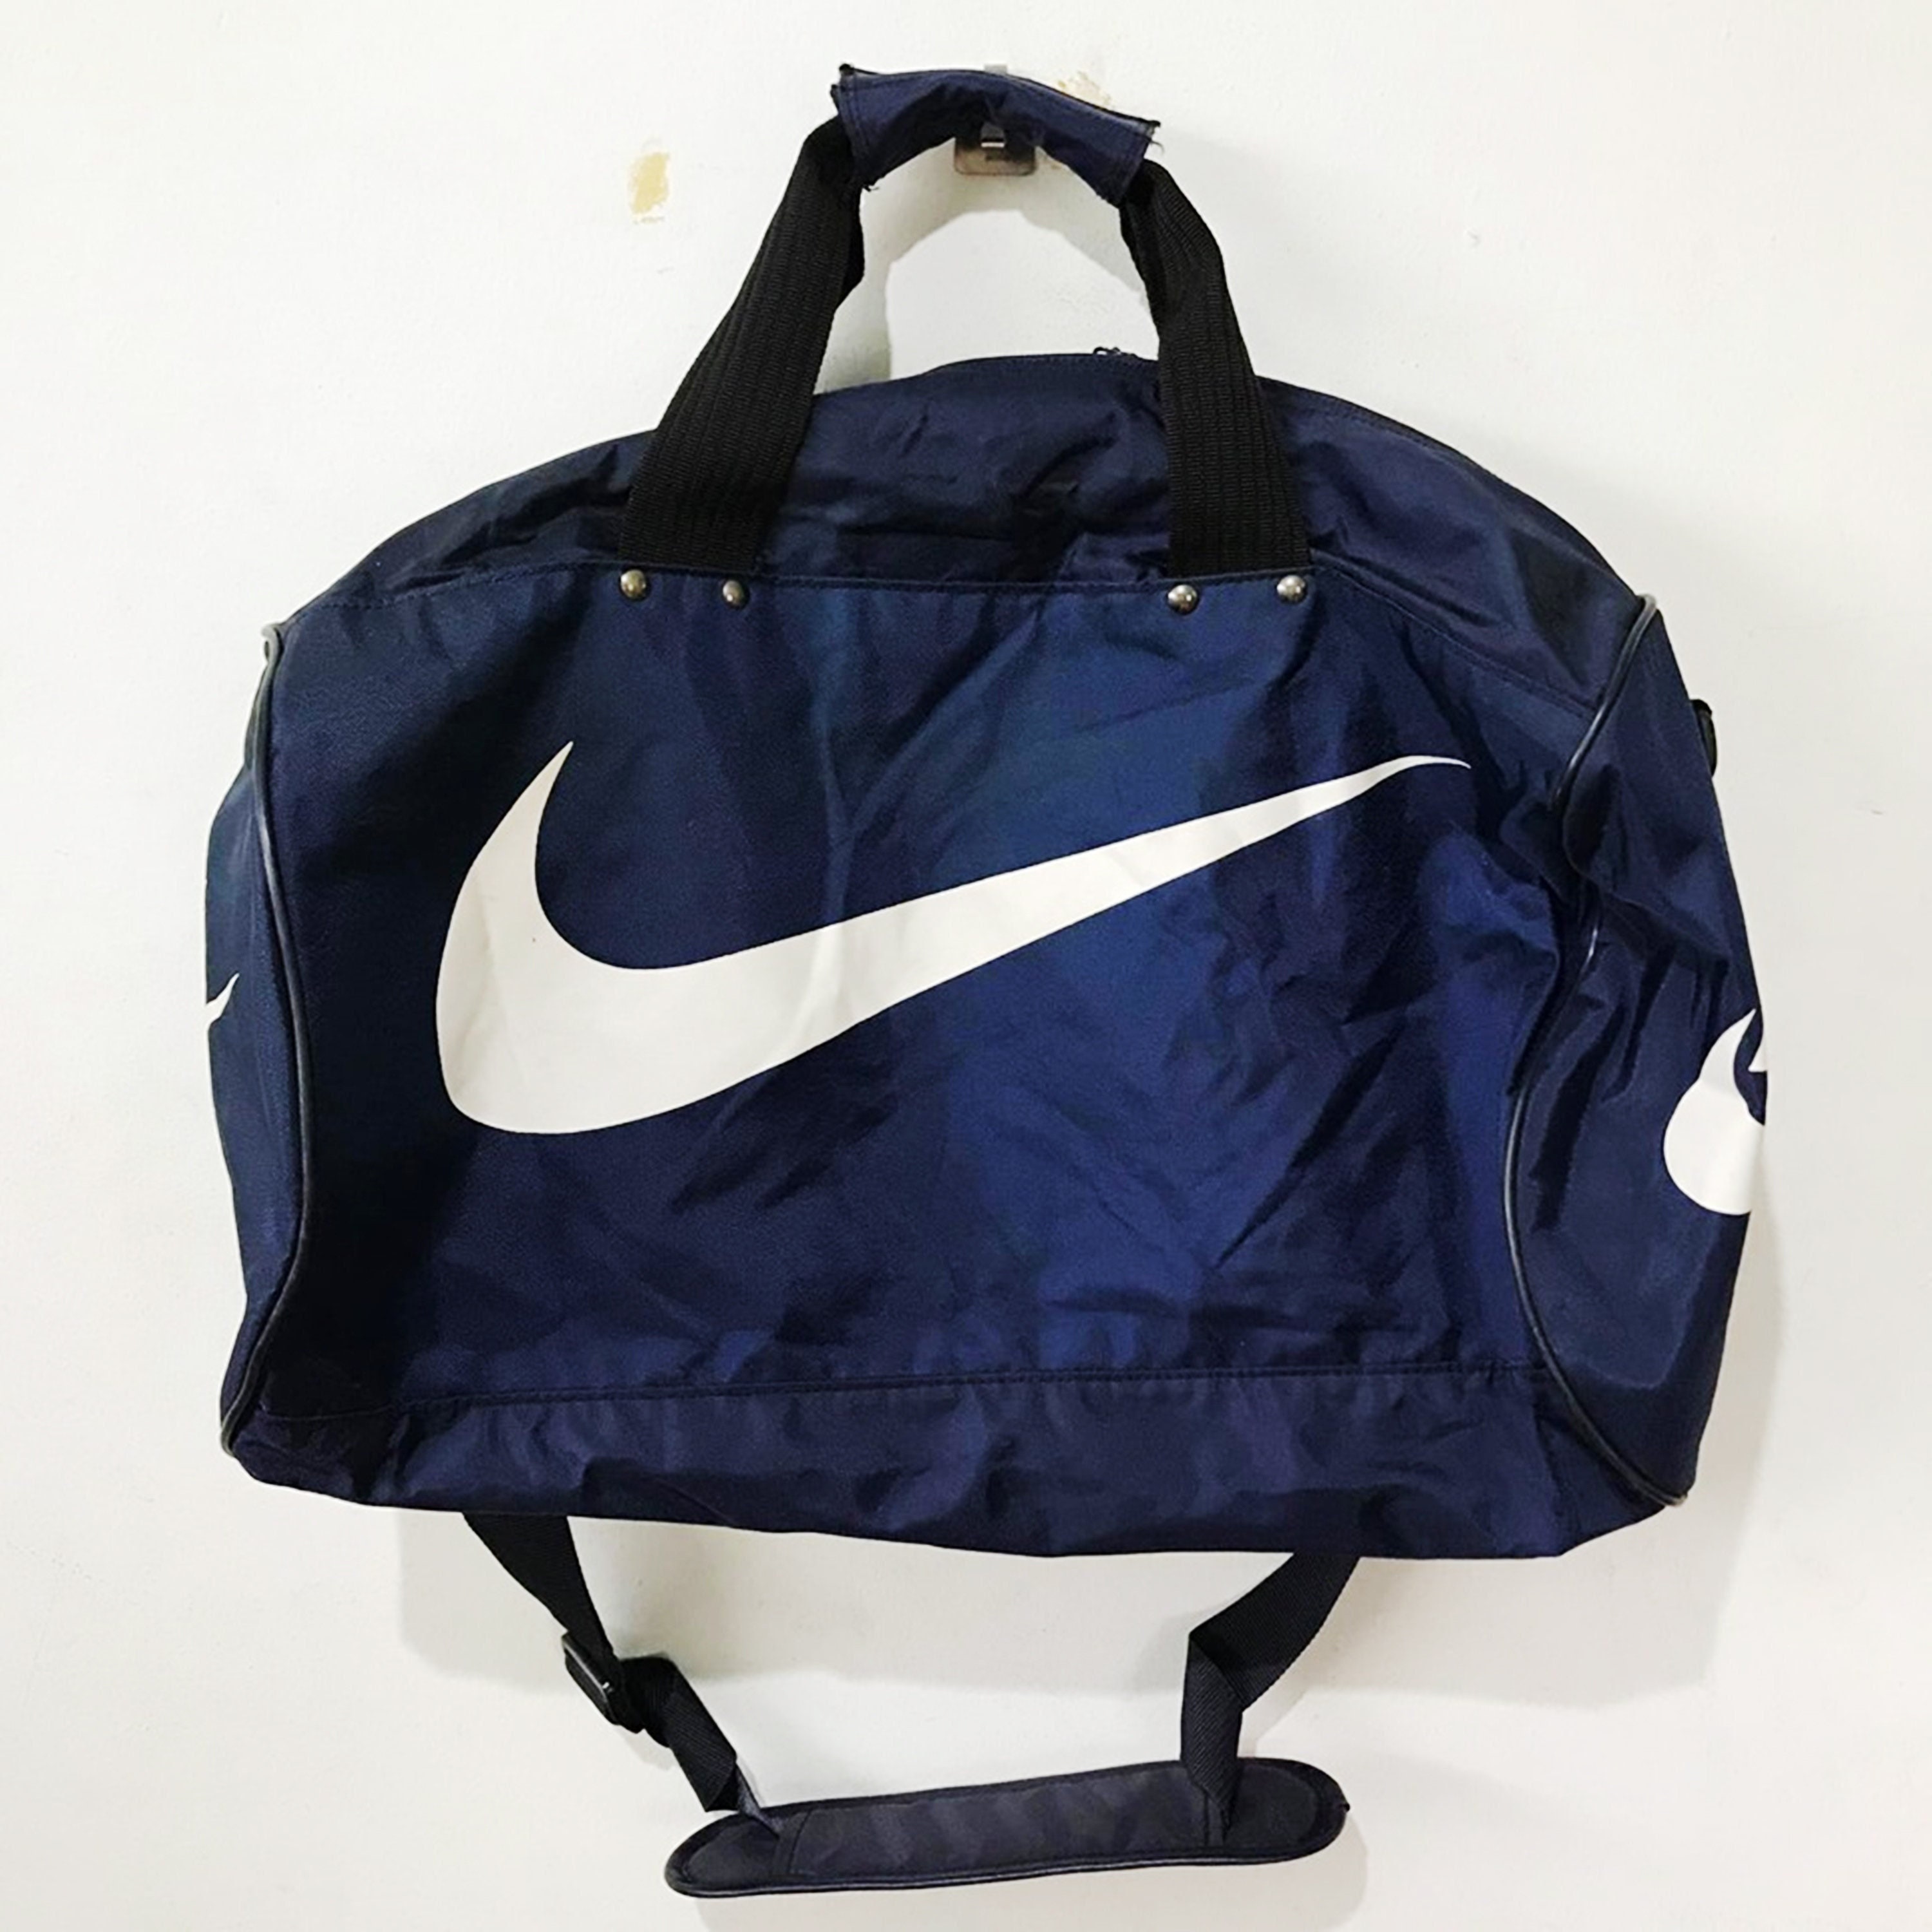 Nike Adults Unisex Hot Pink Duffel Bag Brasilia Travel Luggage Gym Casual  Work